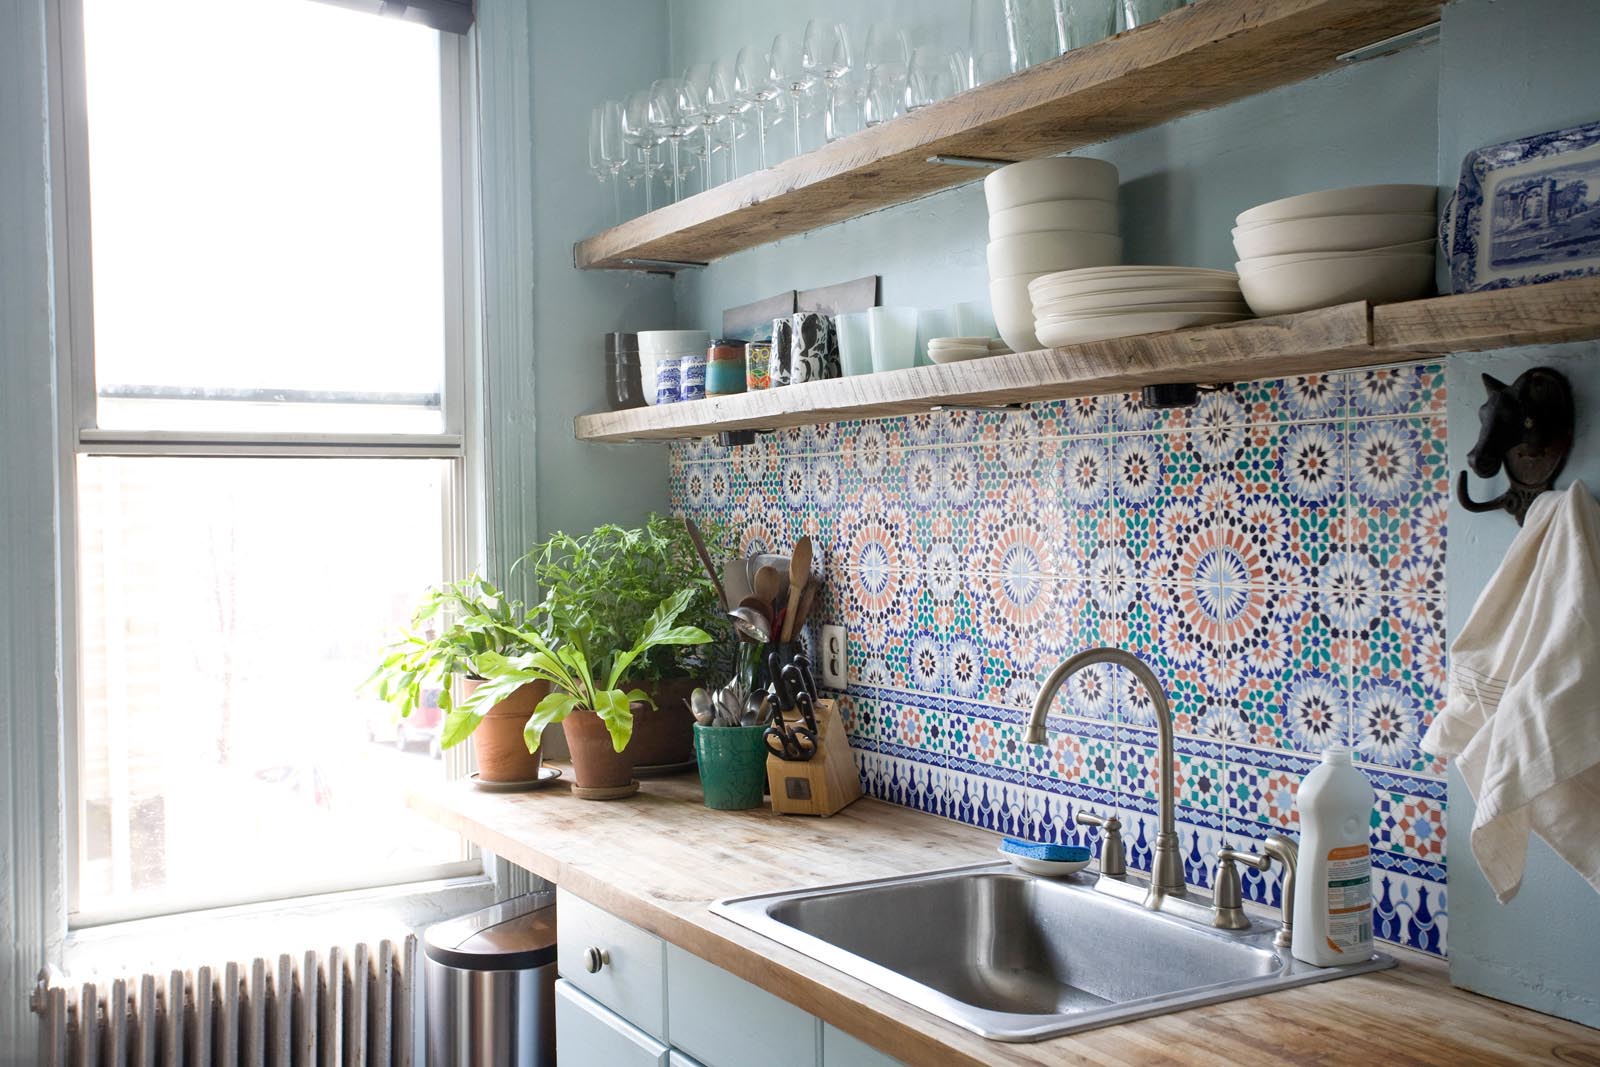 Kitchen decor ideas - mosaic tiles